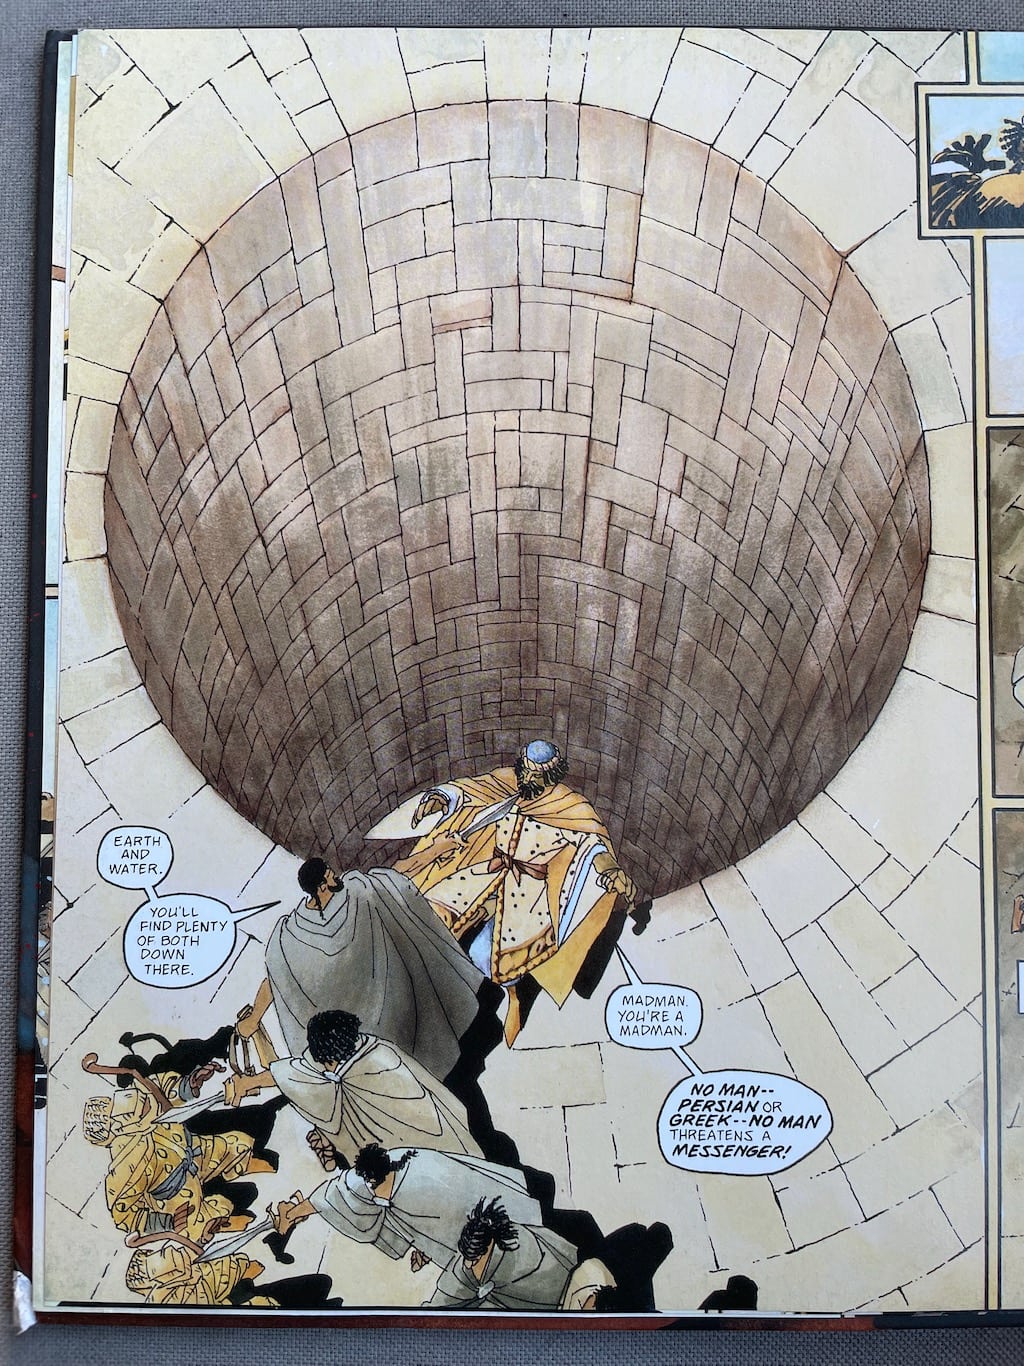 Leonidas pushes Persian Messenger into deep hole